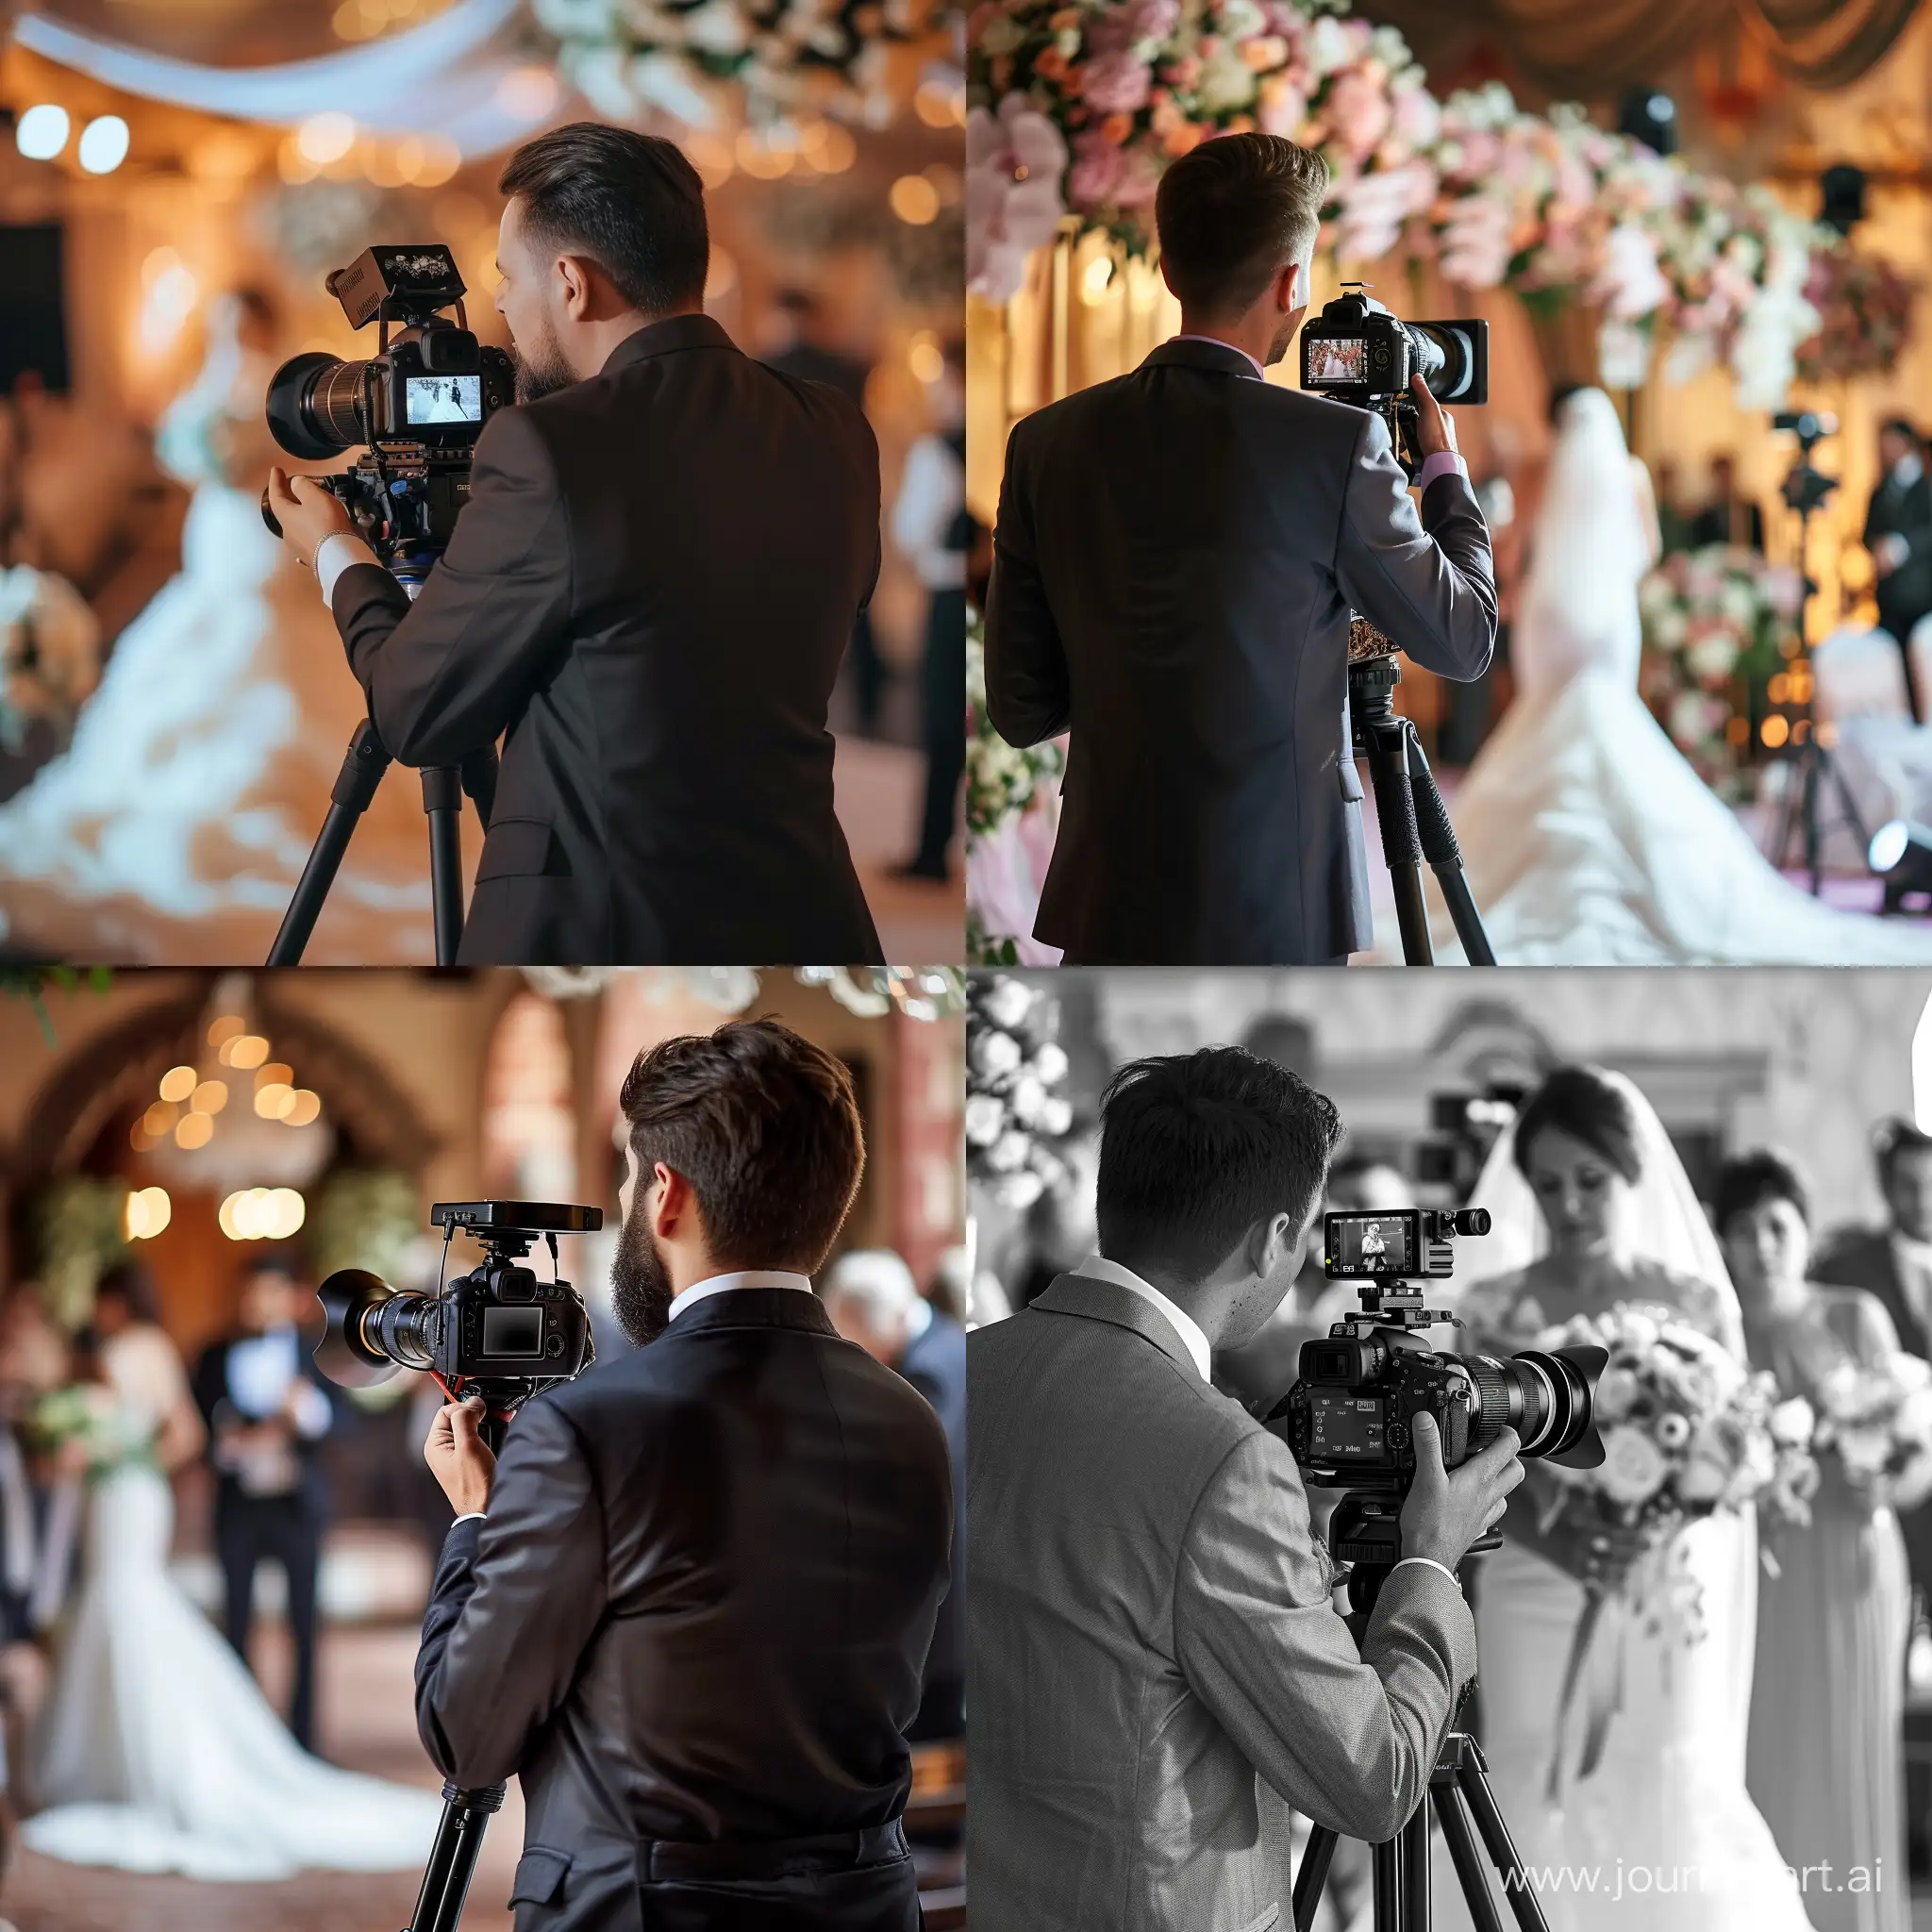 Elegant-Suit-Wedding-Videographer-Capturing-Moments